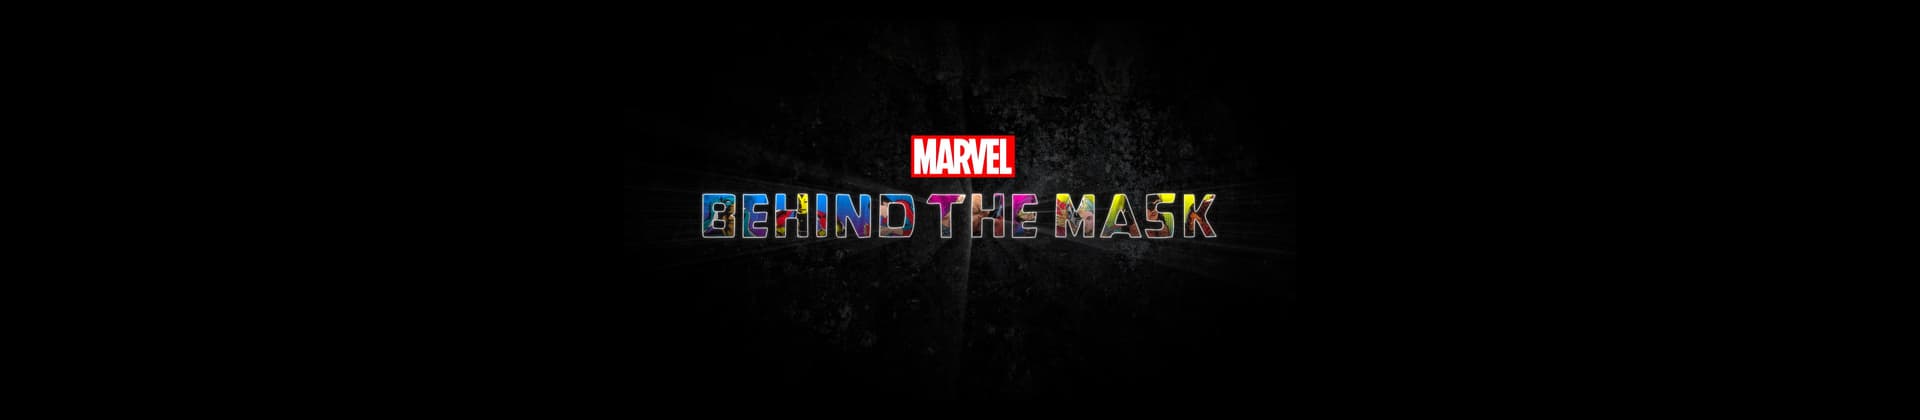 Marvel's Behind the Mask TV Show Disney Plus Season 1 Logo on Black